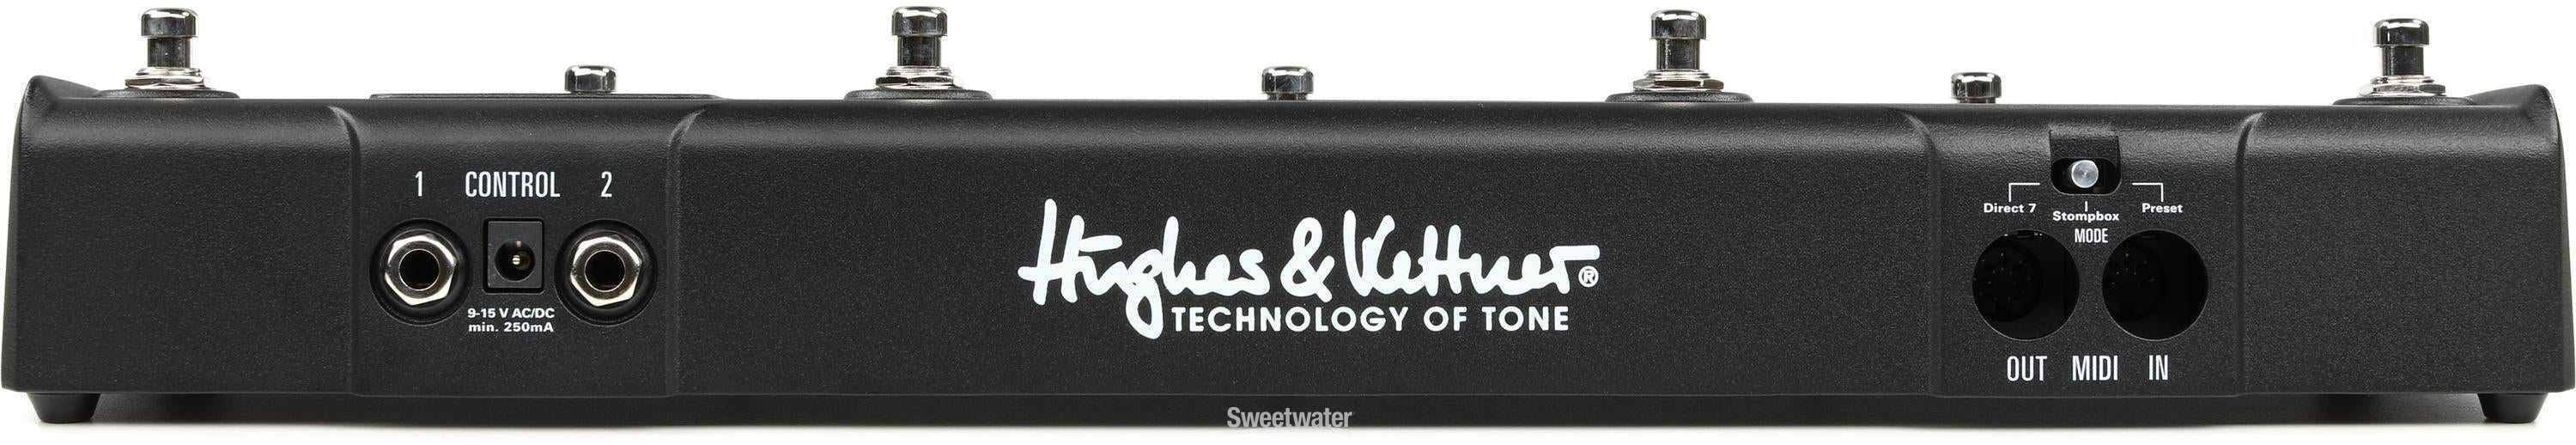 Hughes & Kettner FSM-432 MK IV MIDI Board Foot Controller | Sweetwater